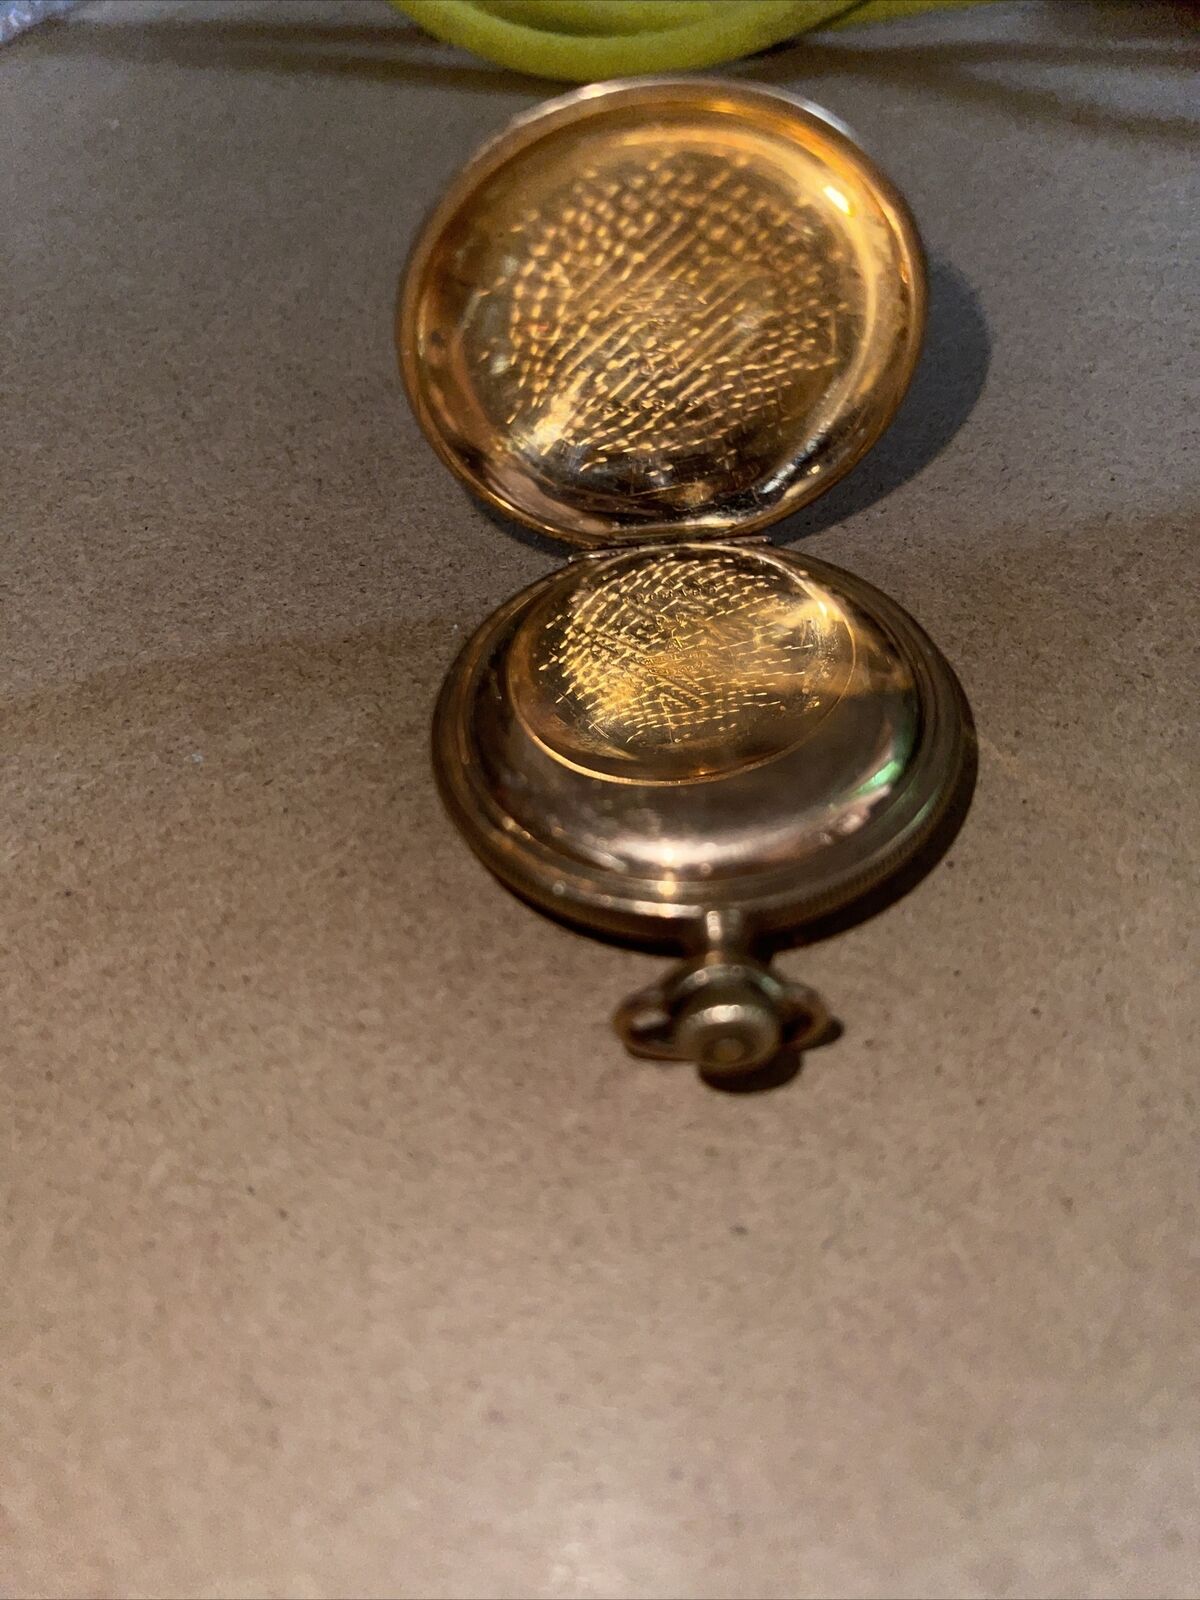 Antique Elgin Pocket Watch - Victorian Style